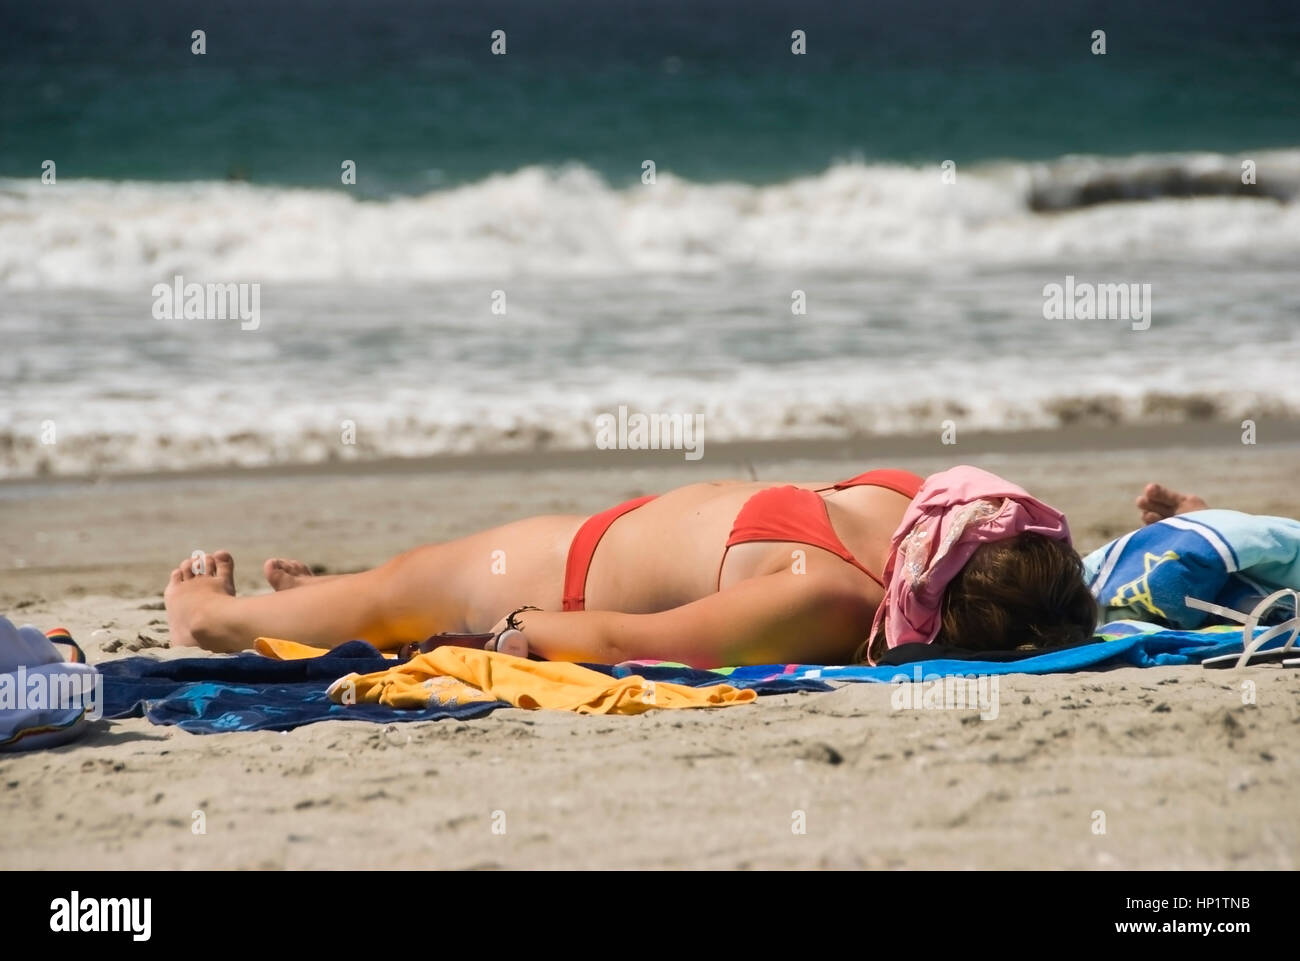 Frau im Bikini sonnt sich am Sandstrand suns - la mujer en bikini en la playa Foto de stock